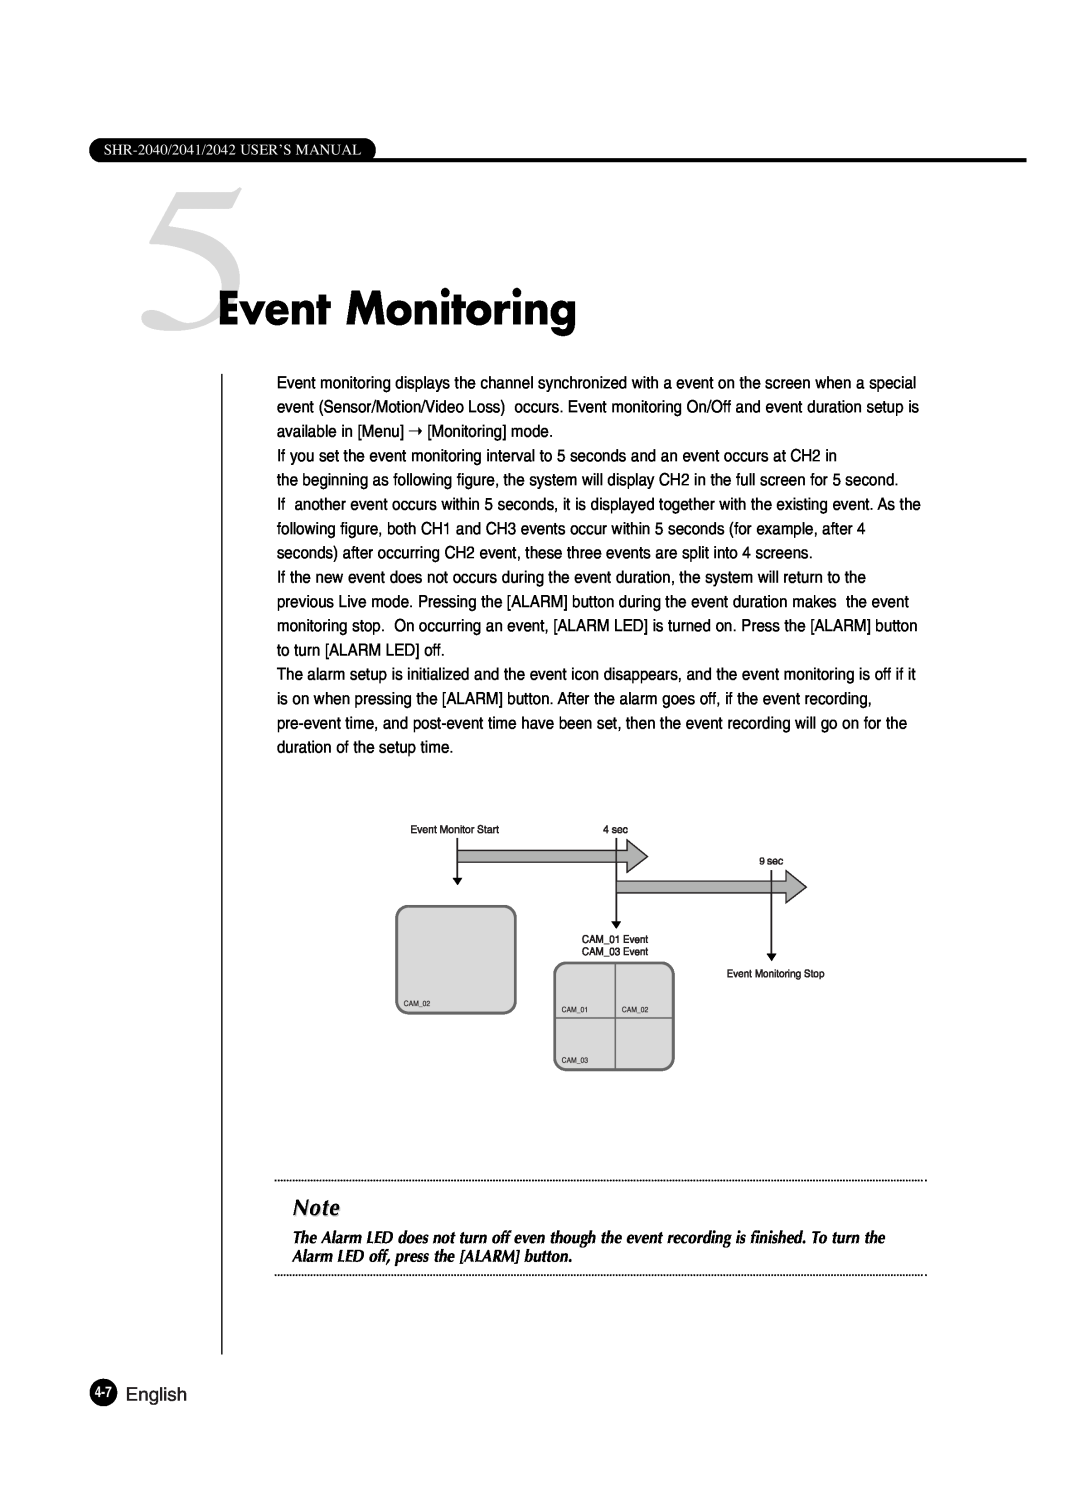 Samsung SHR-2042P250, SHR-2040P250 manual 5Event Monitoring, English 